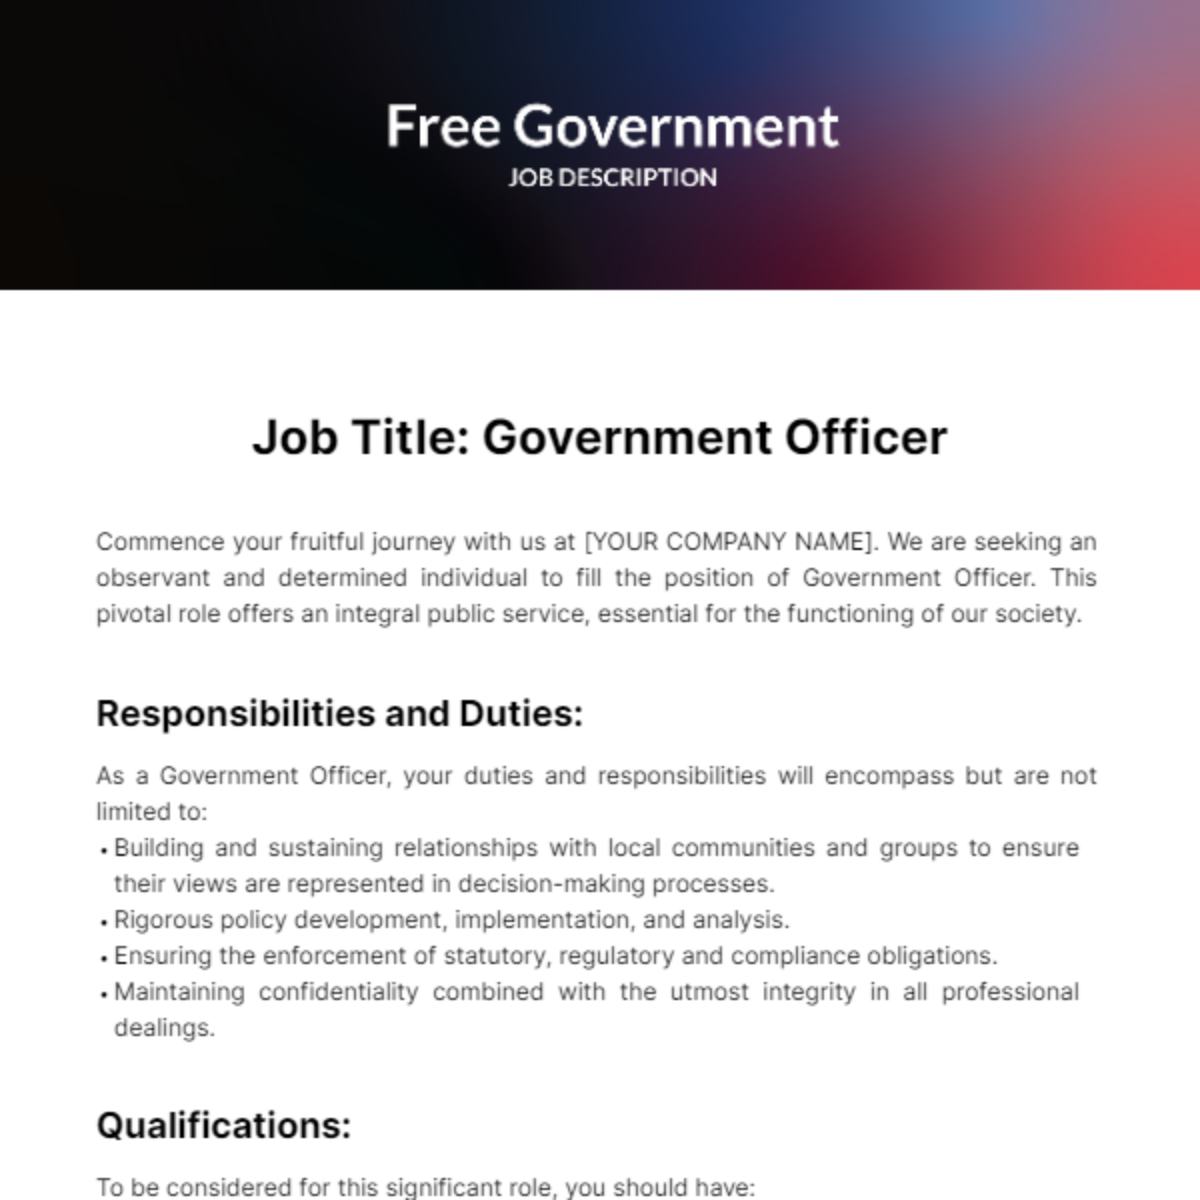 Free Government Job Description Template